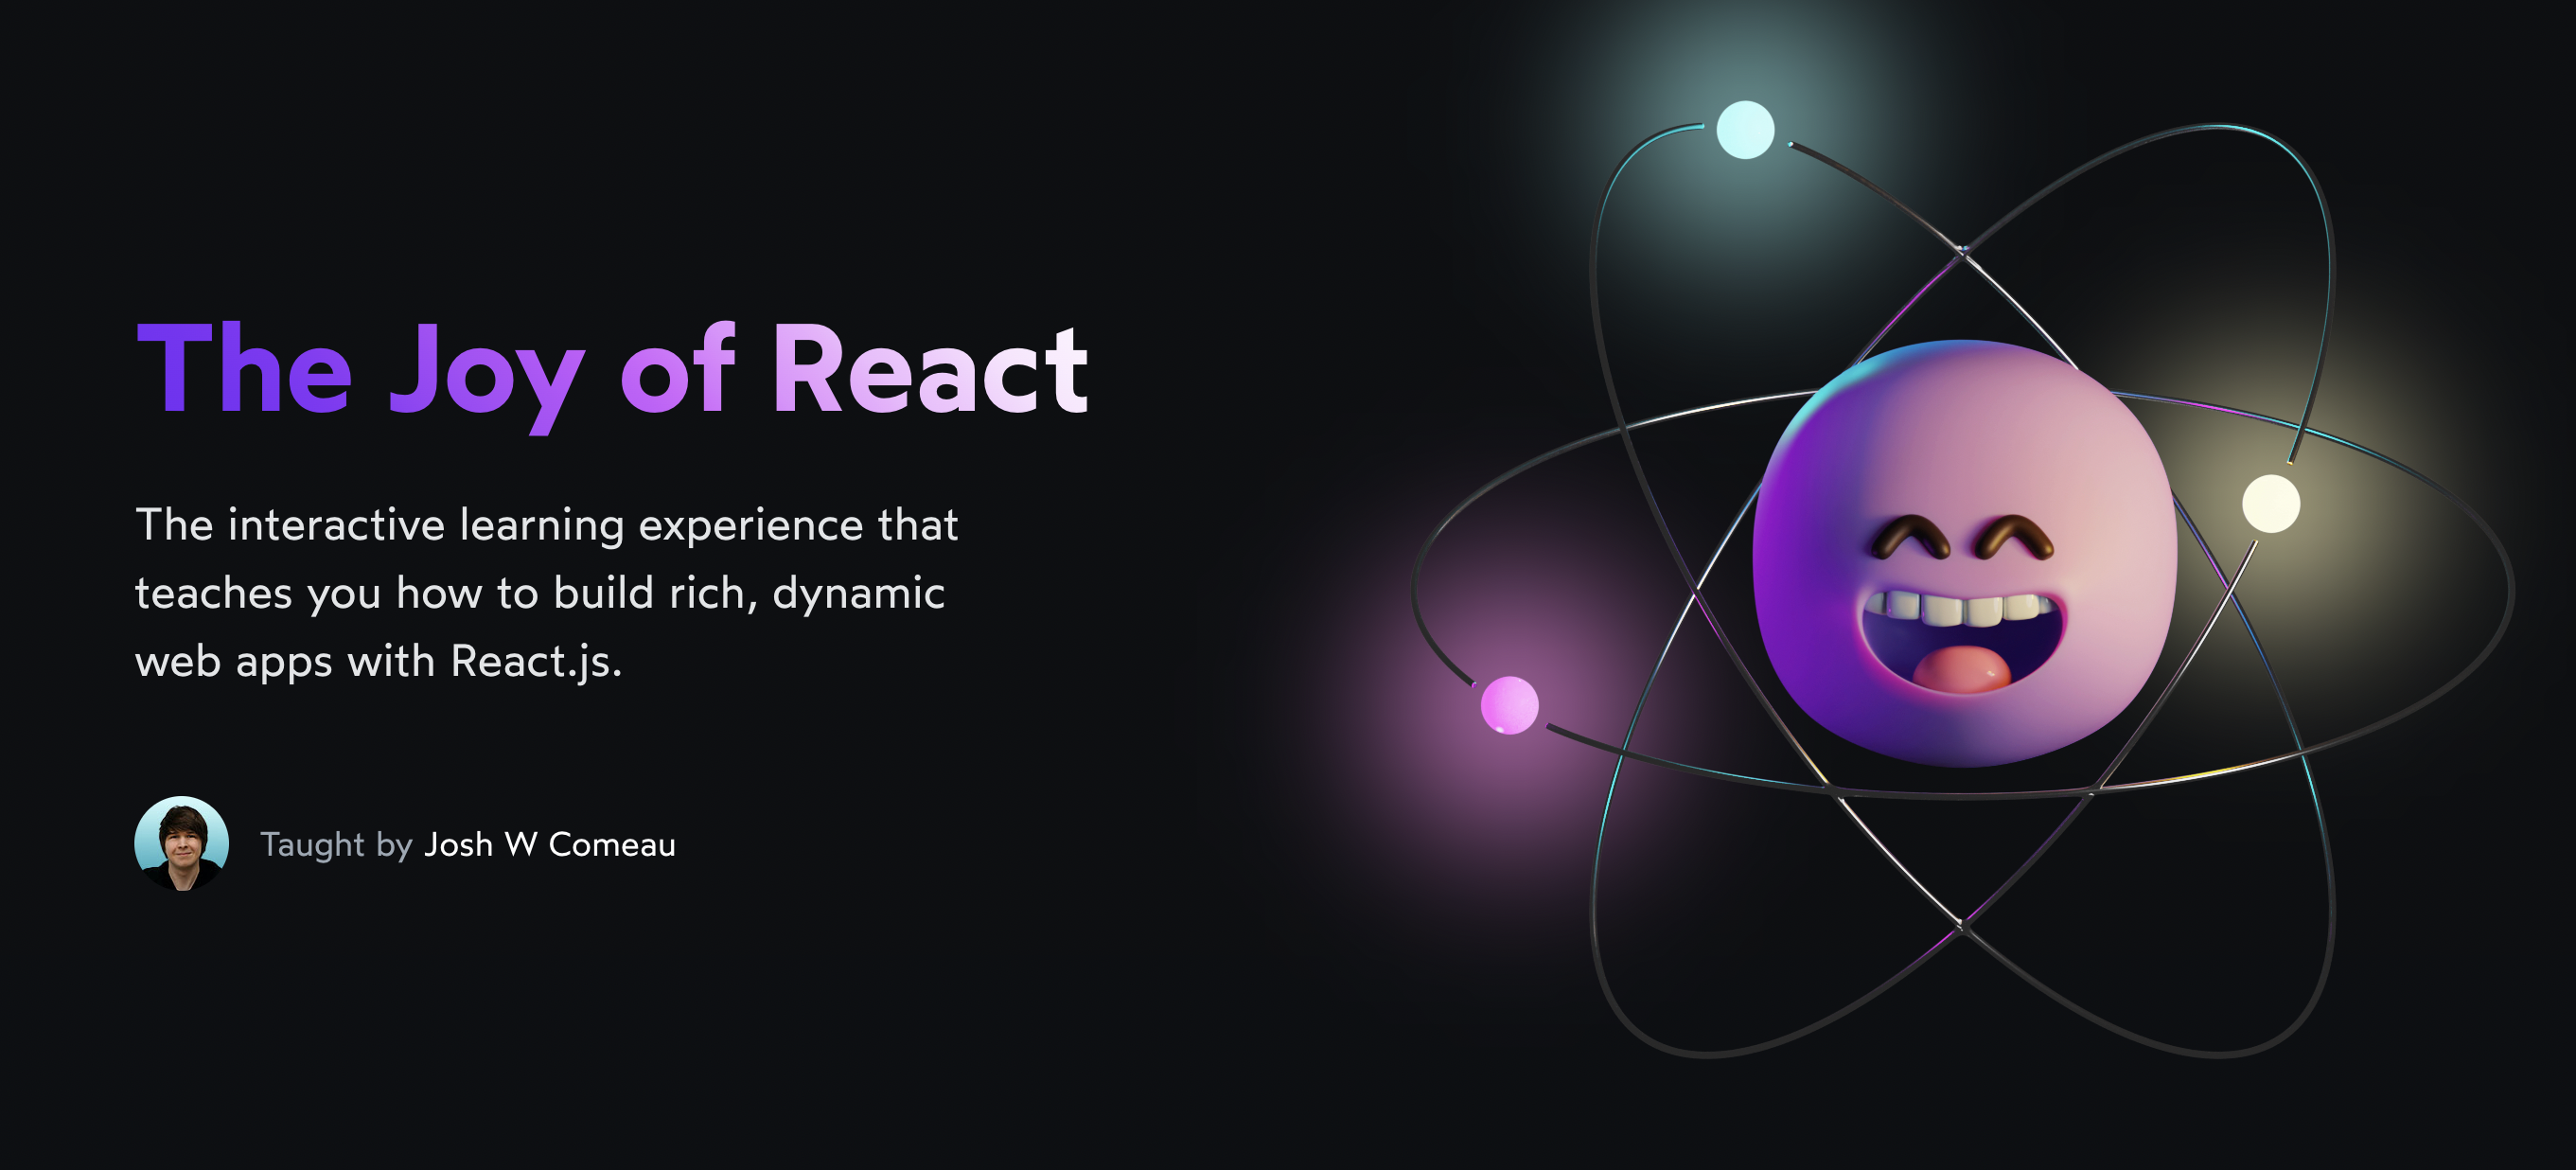 Visit the “Joy of React” homepage